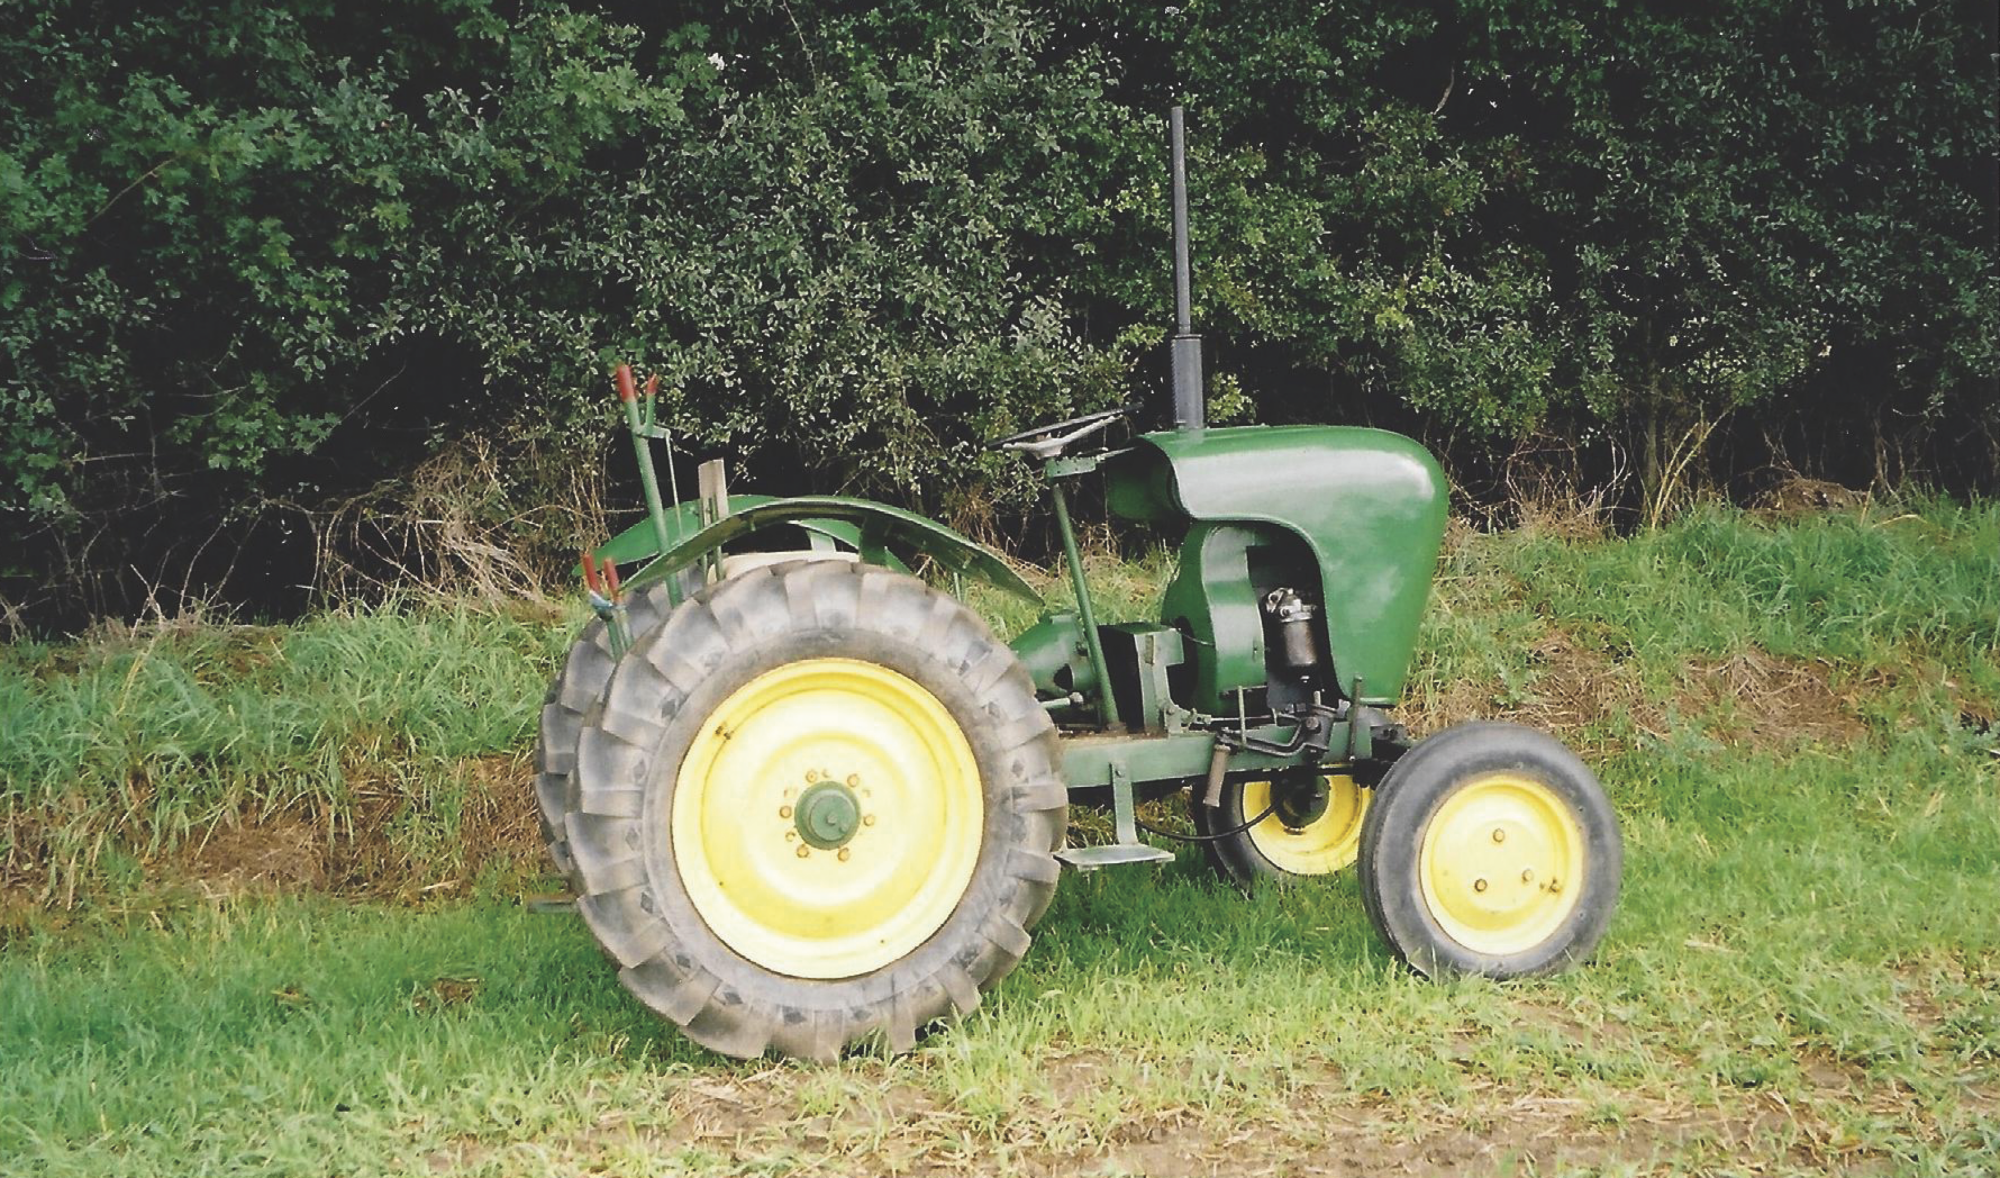 The Crawley 75 tractor